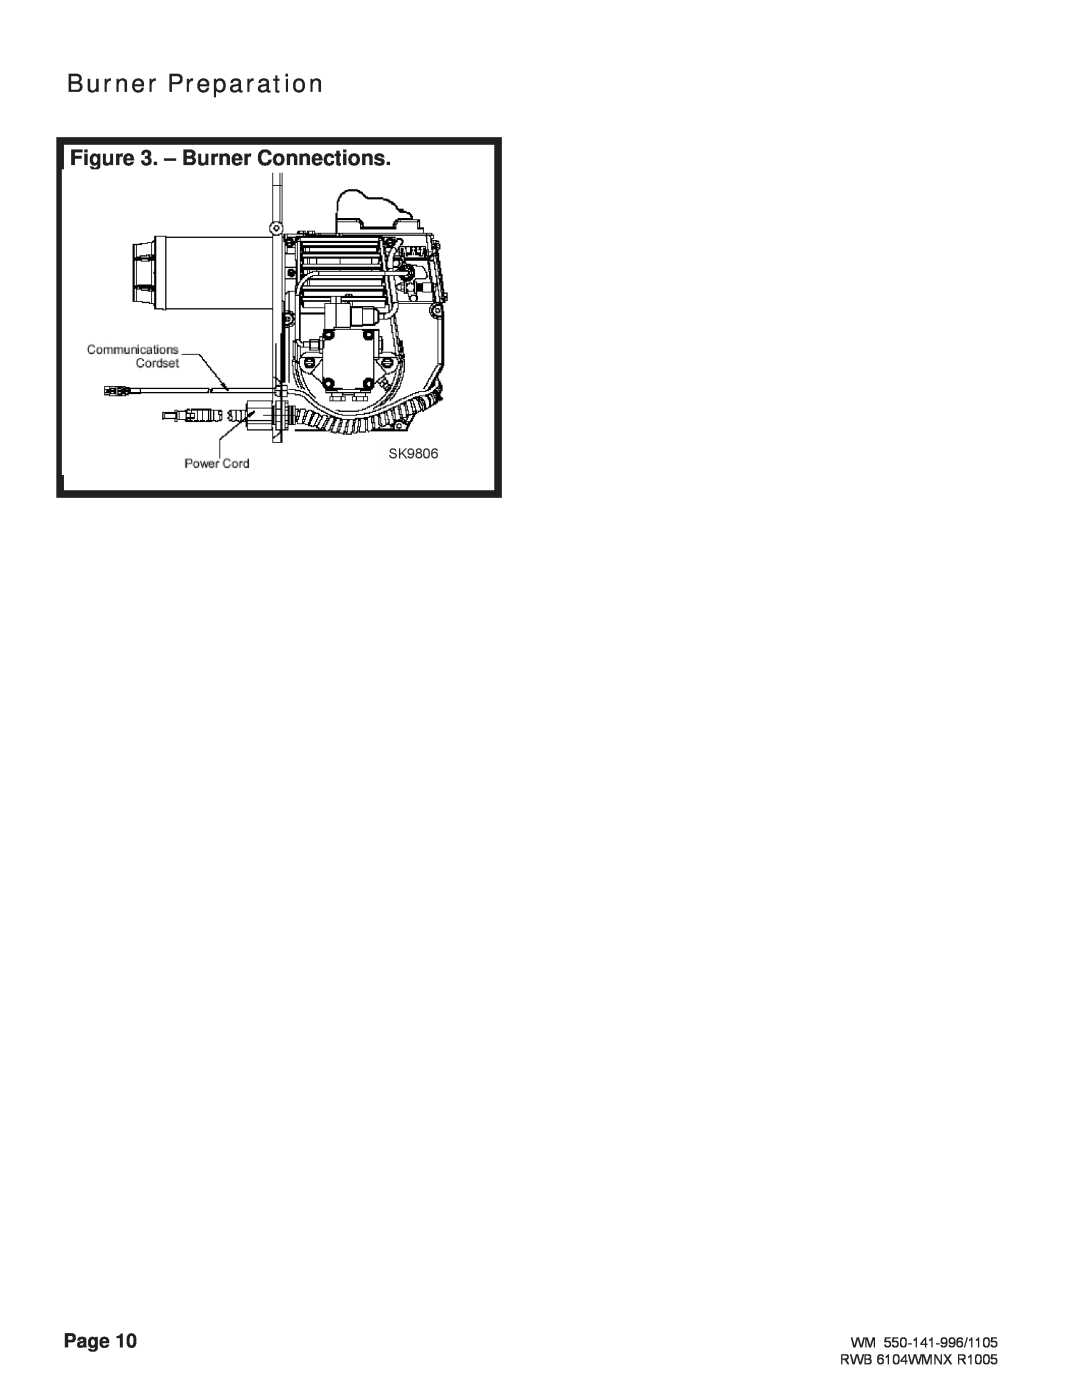 Weil-McLain NX manual Burner Preparation, Burner Connections, Page 